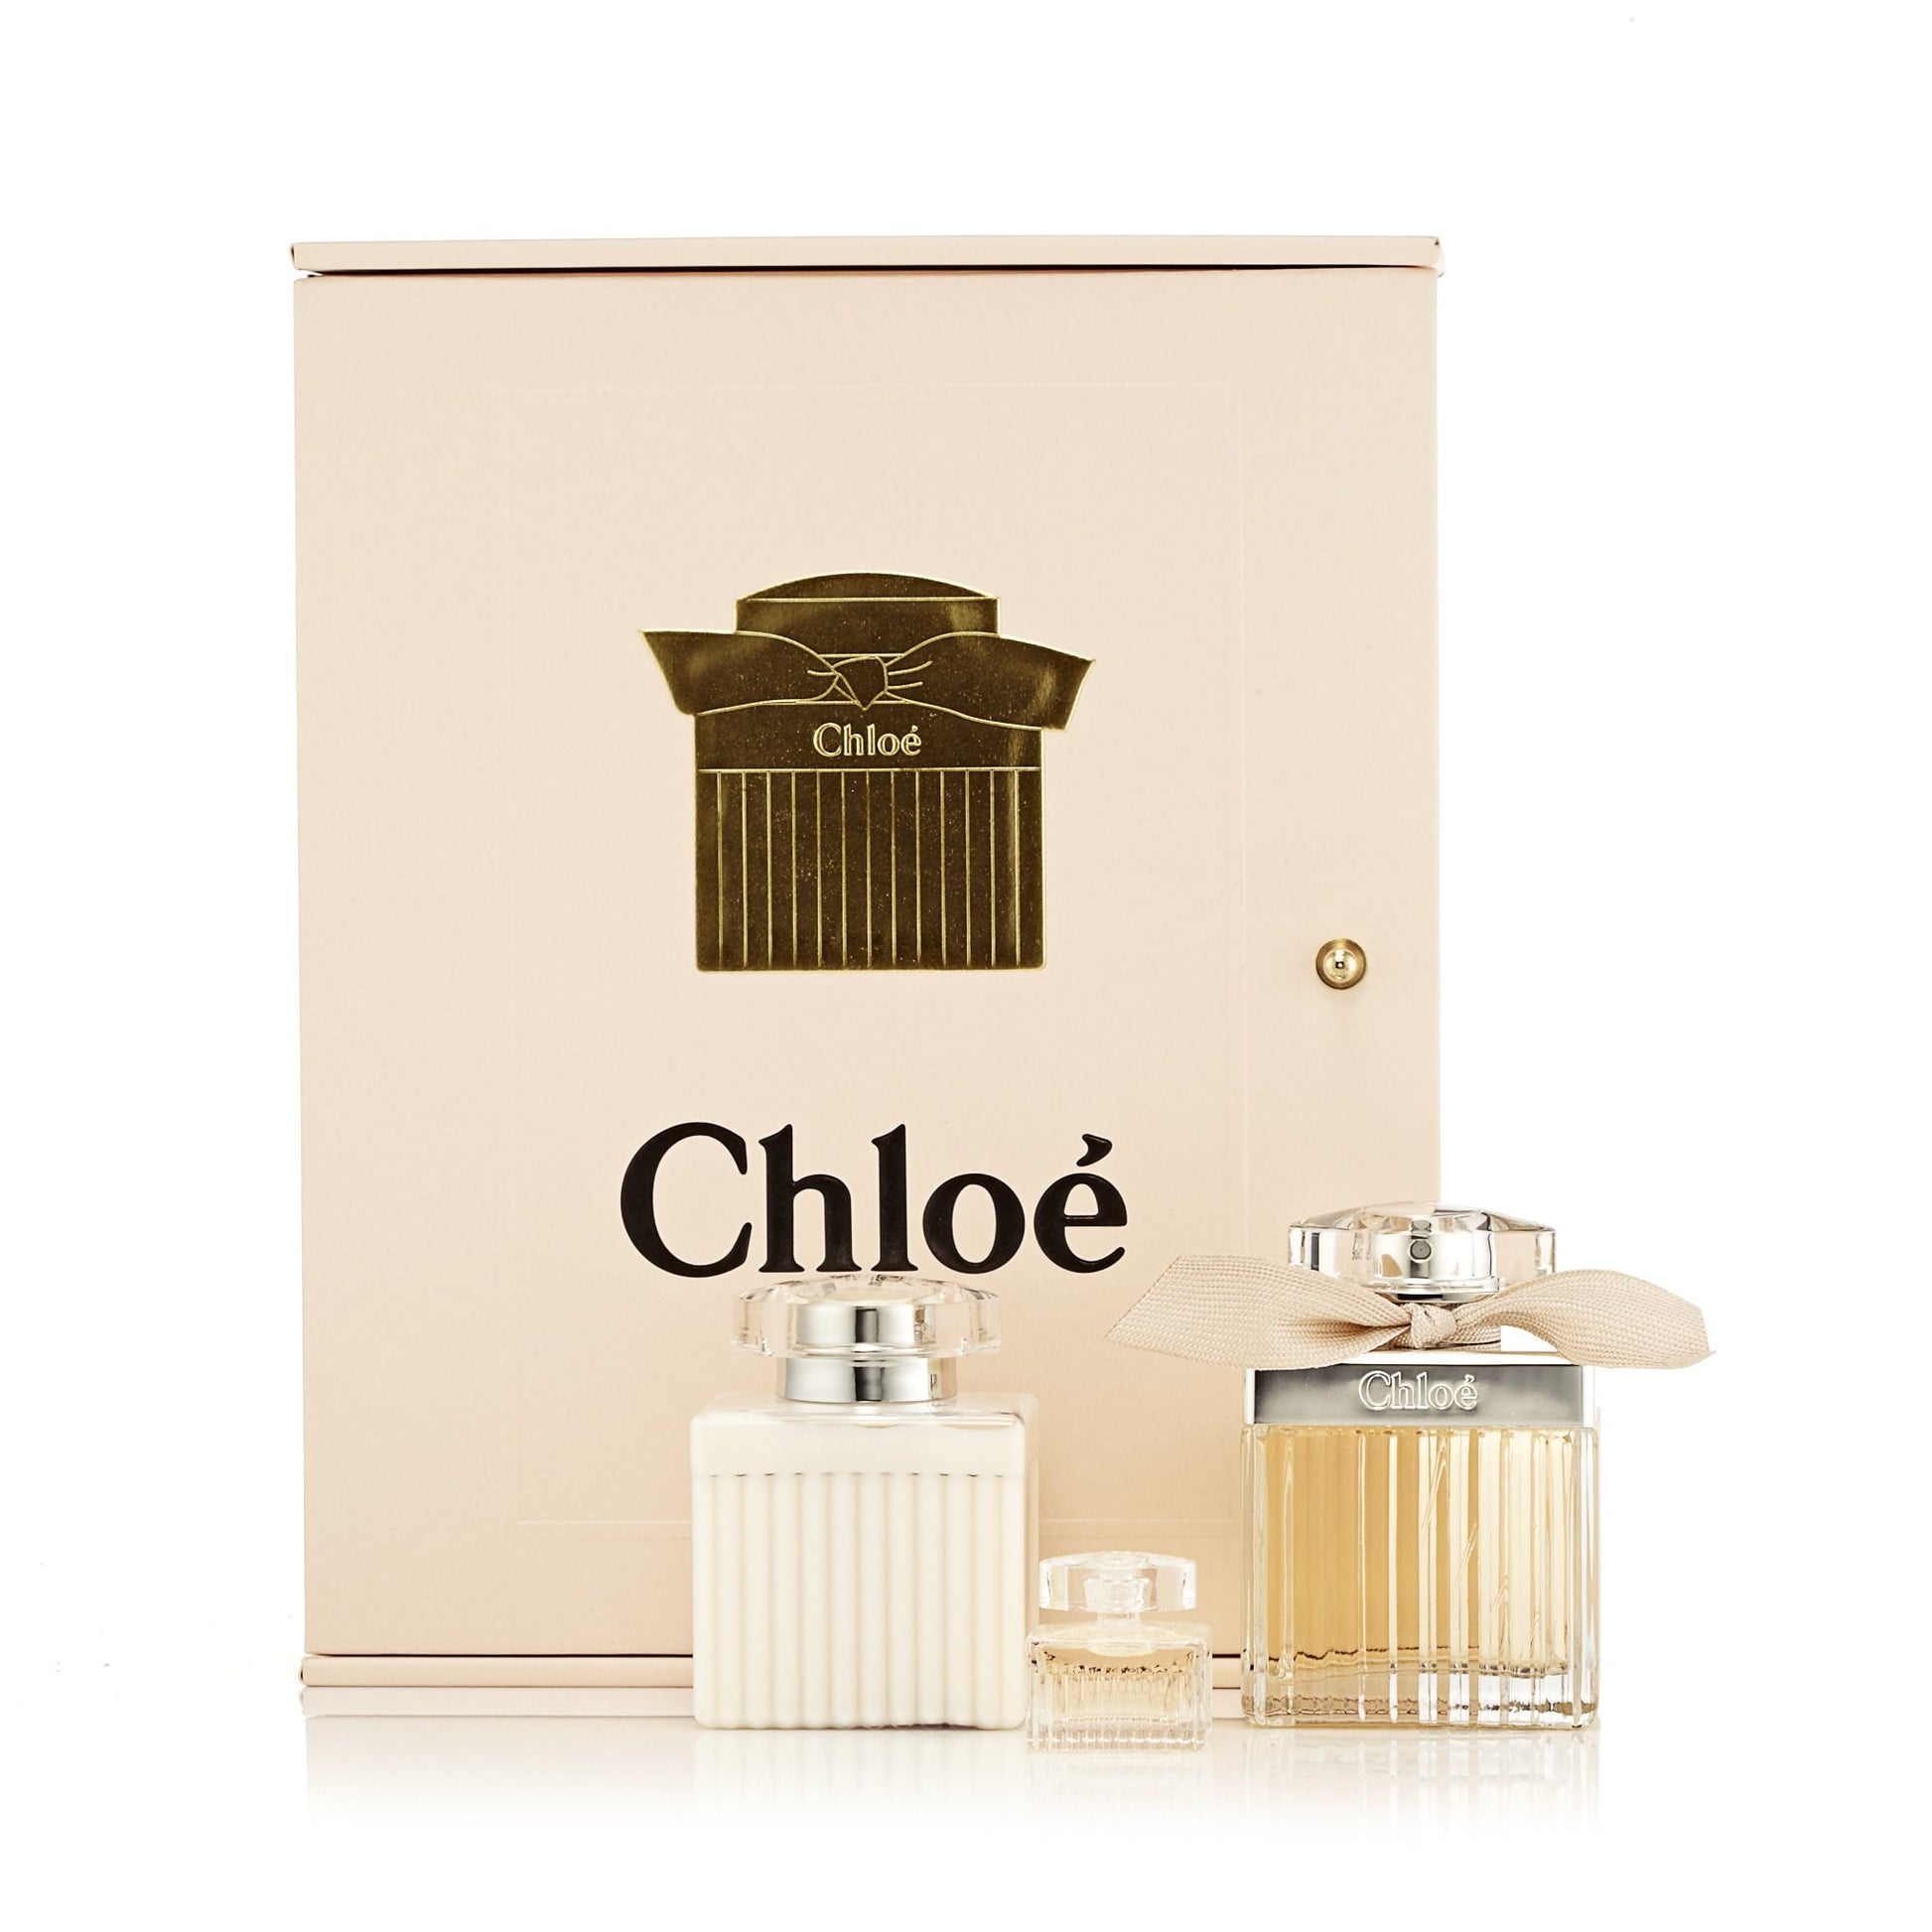 Chloe Gift Set for Women by Chloe 2.5 oz. Click to open in modal